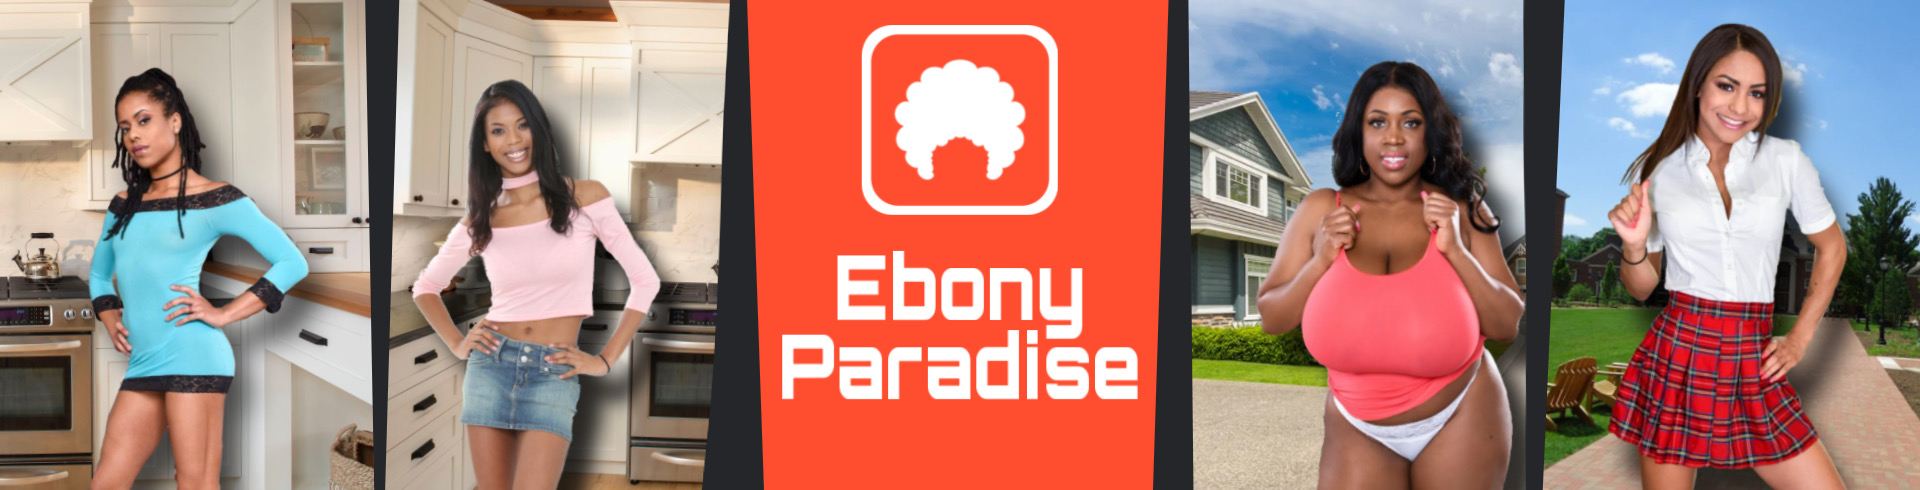 Ebony Paradise poster